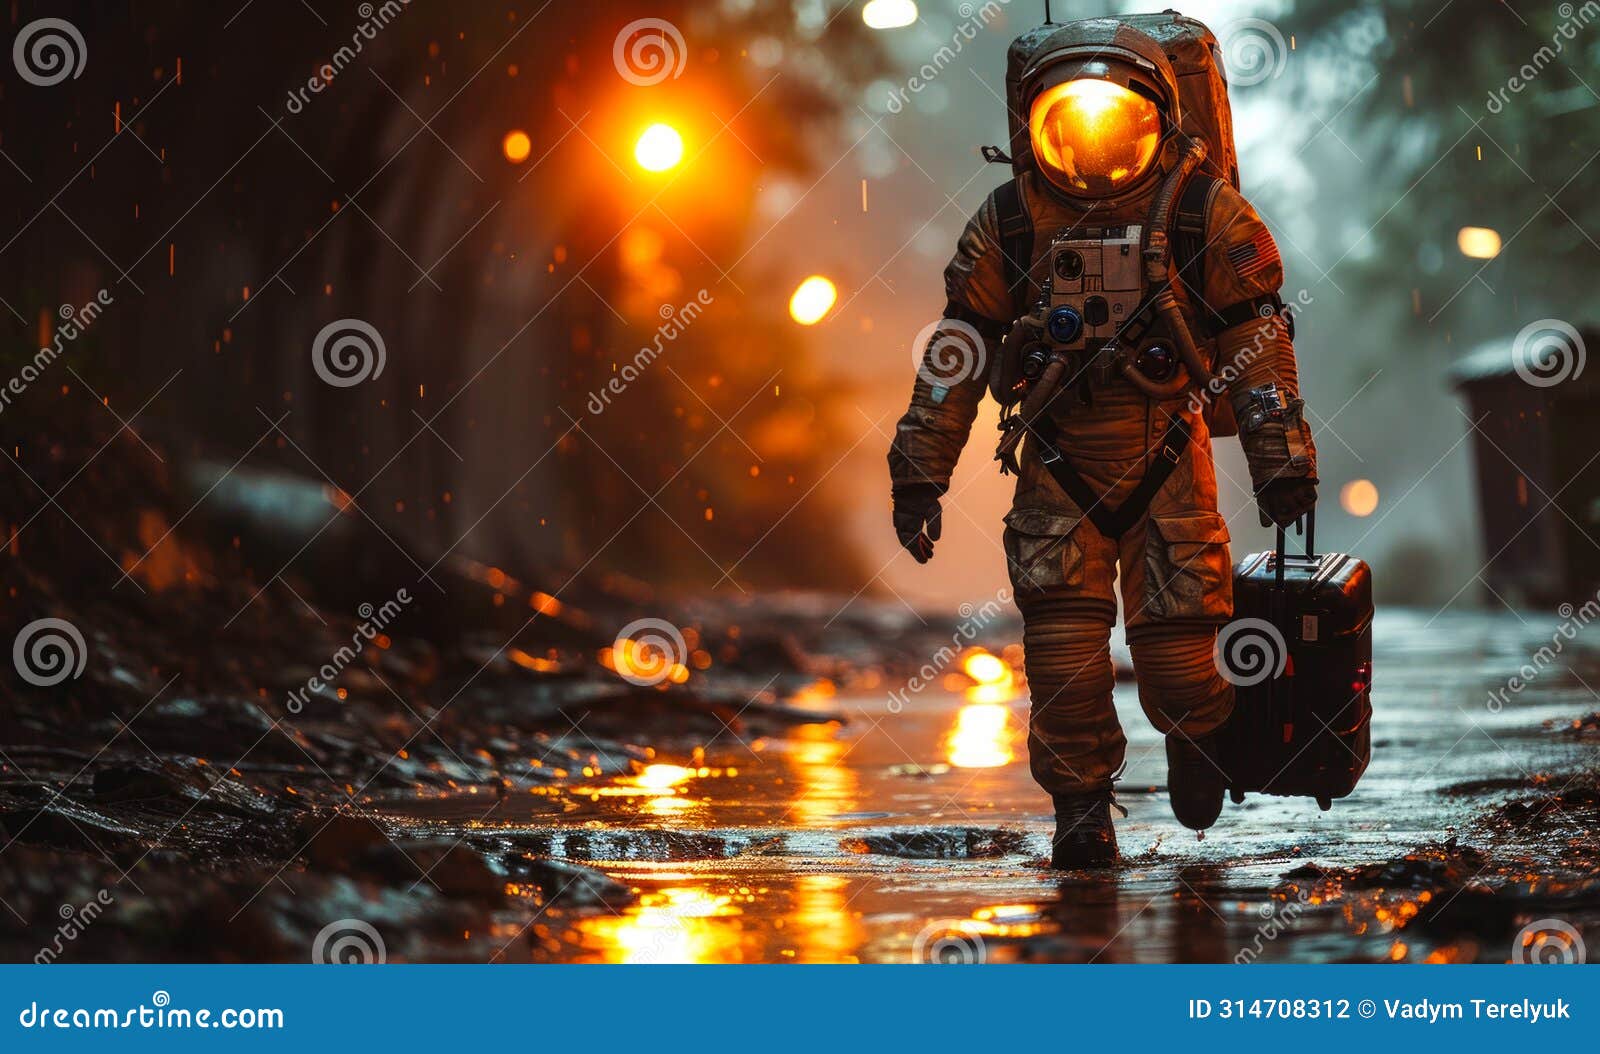 astronaut walks on the wet road with suitcase in the rain foto de archivo